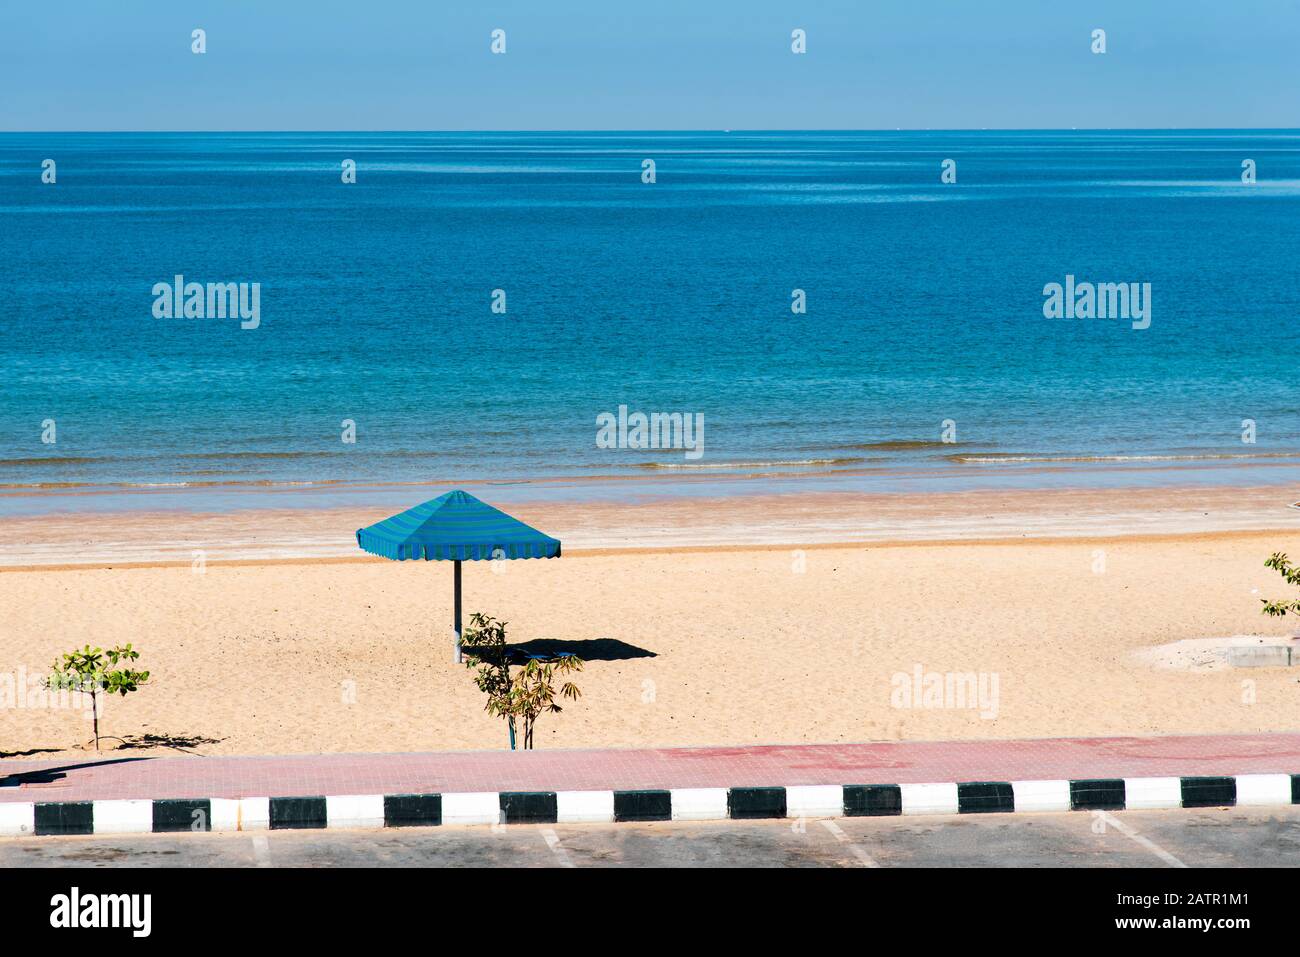 Aerial view at Flamingo beach in Ras Al Khaimah emirate of United Arab Emirates Stock Photo